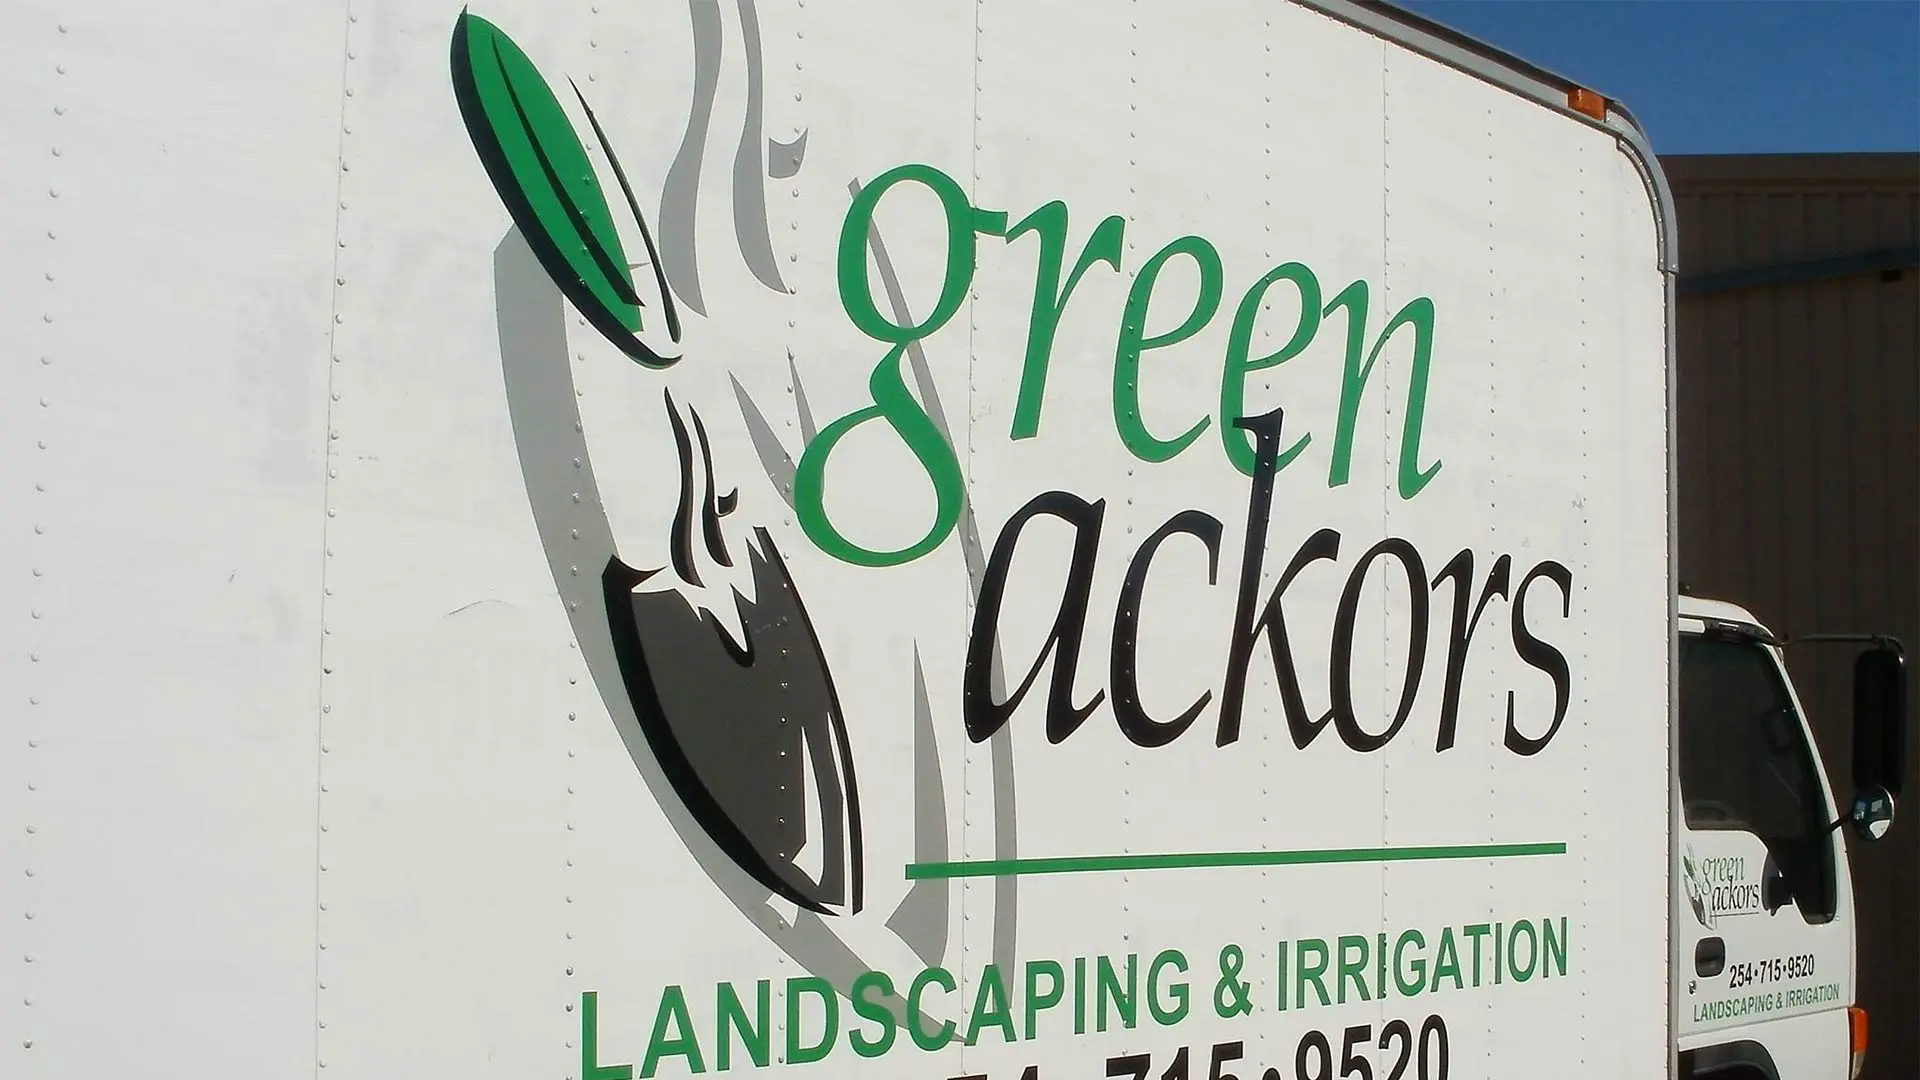 Green Ackors Landscaping & Irrigation work truck with logo branding near Waco, TX.